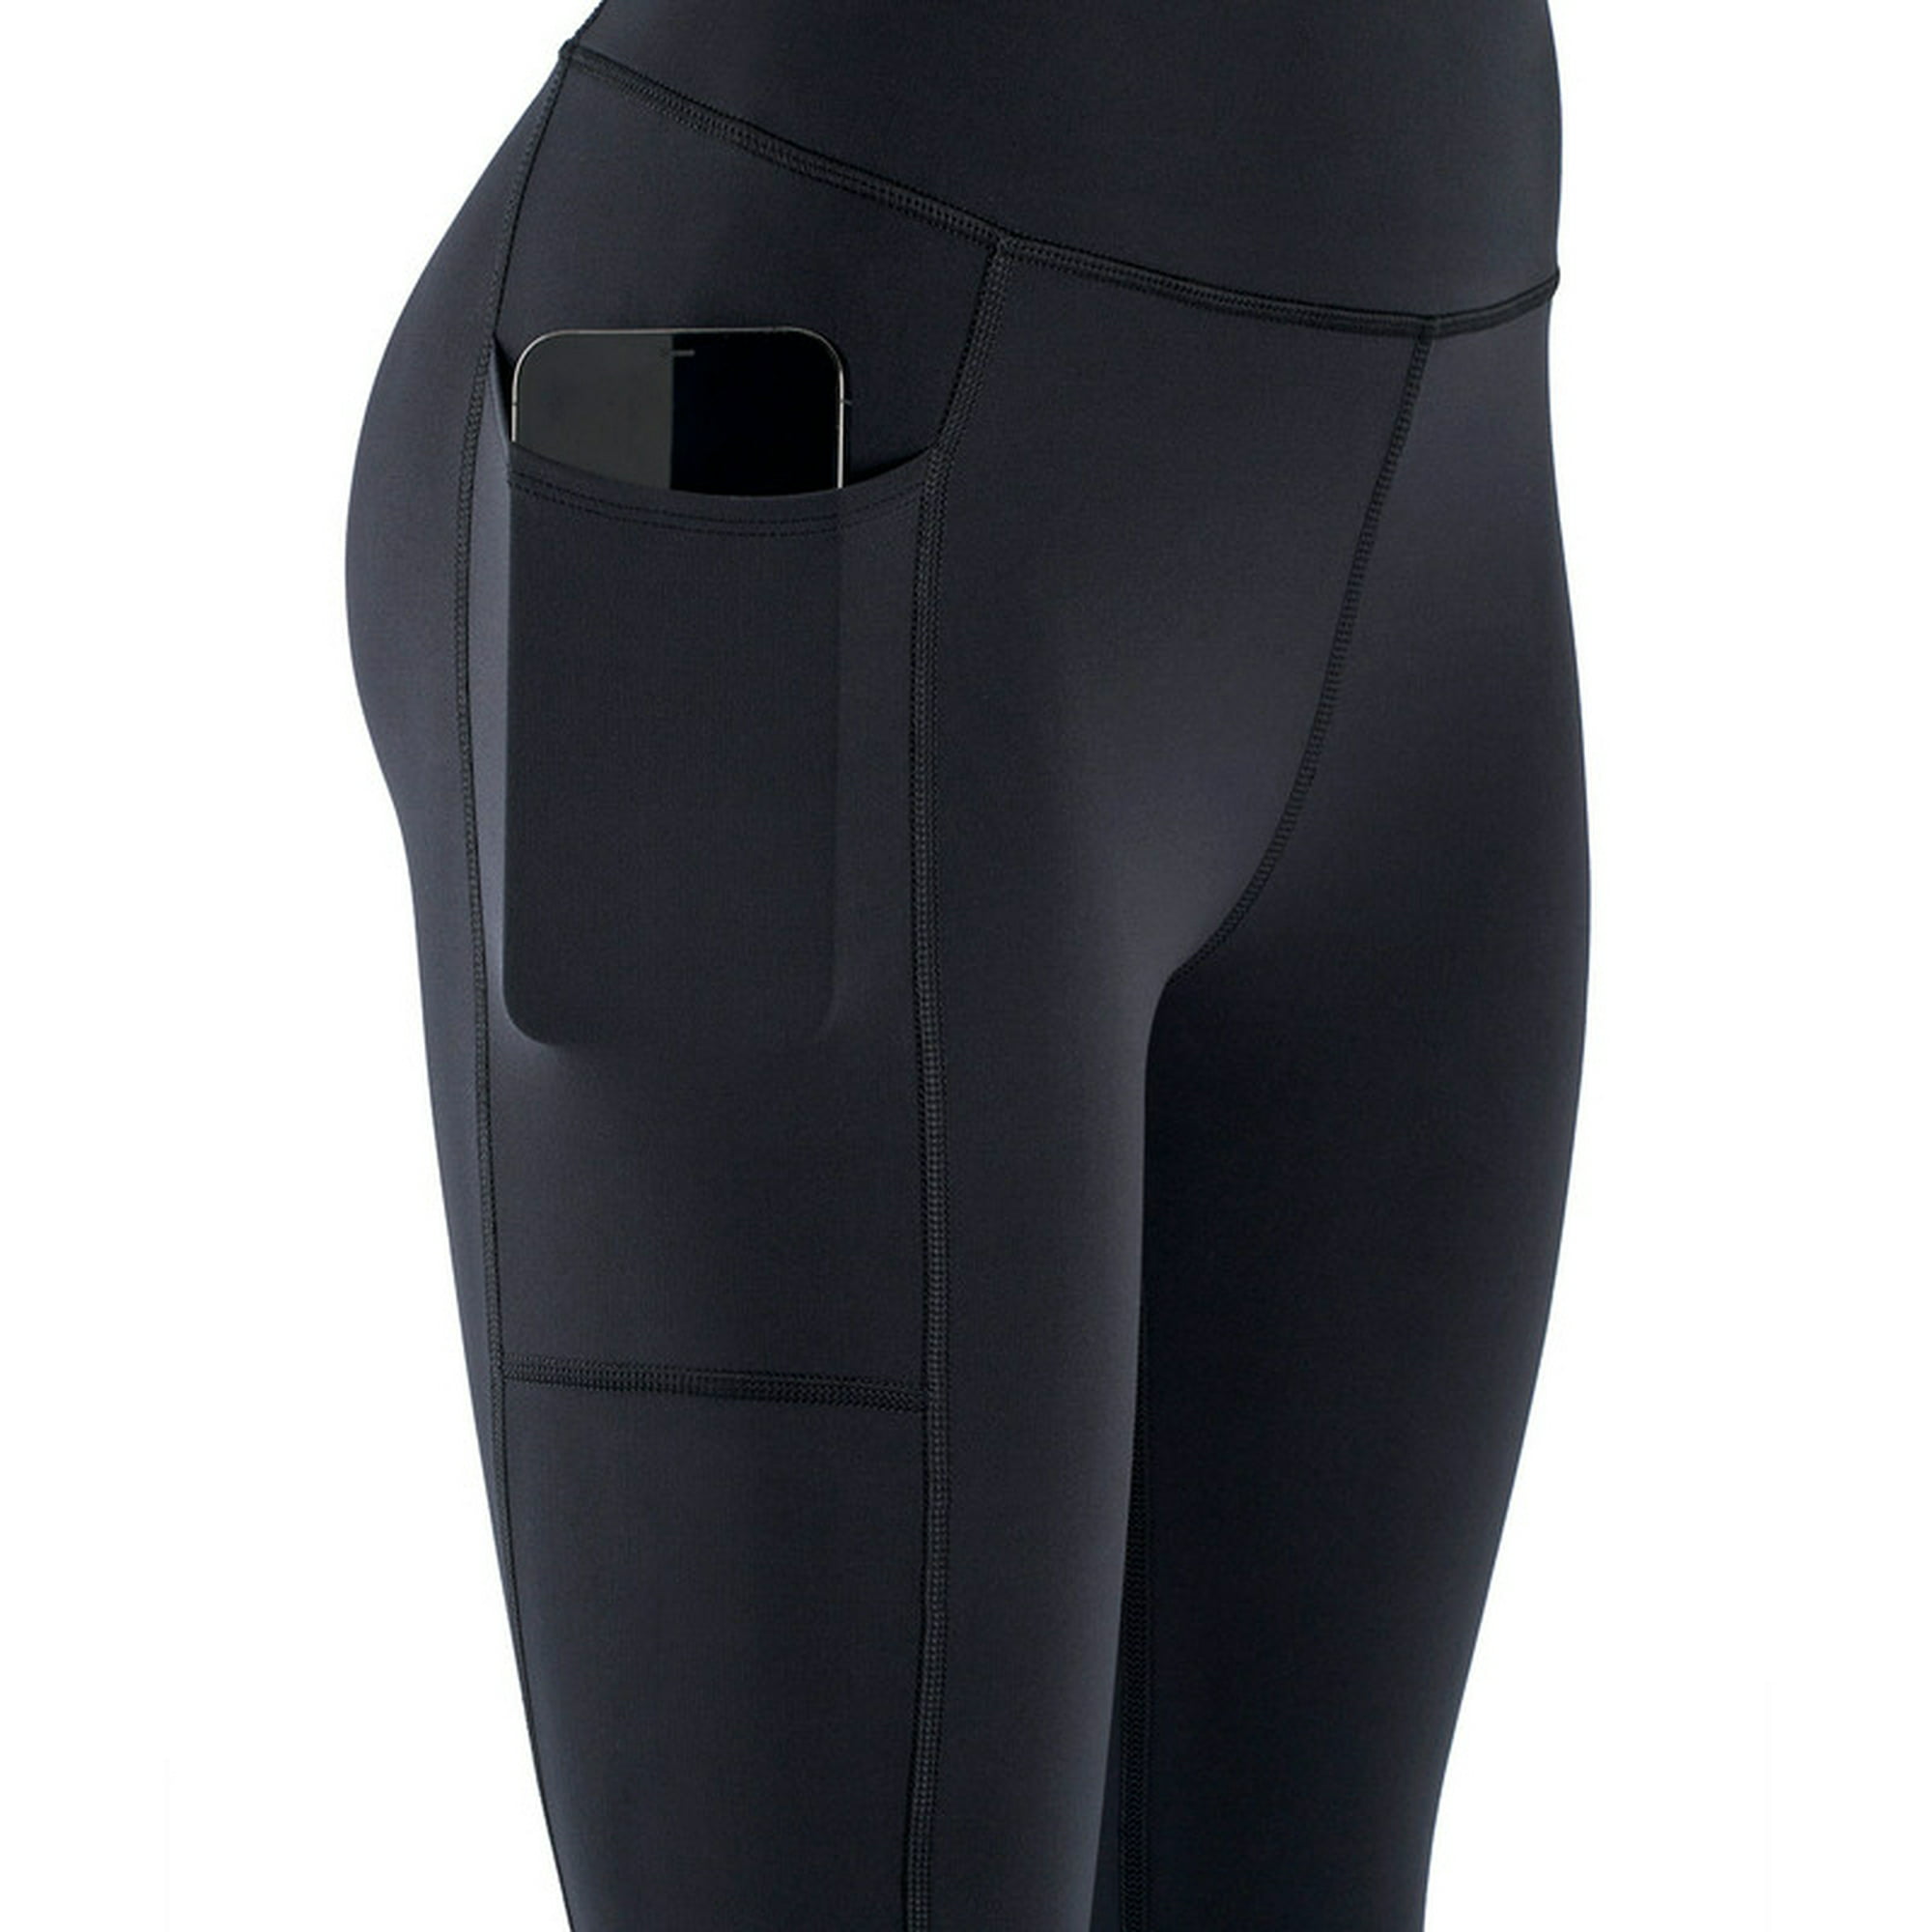 Pantalones cortos deportivos para mujer Cintura alta Entrenamiento Correr  Yoga Pantalones cortos Gimnasio XS Negro l kusrkot Shorts deportivos para